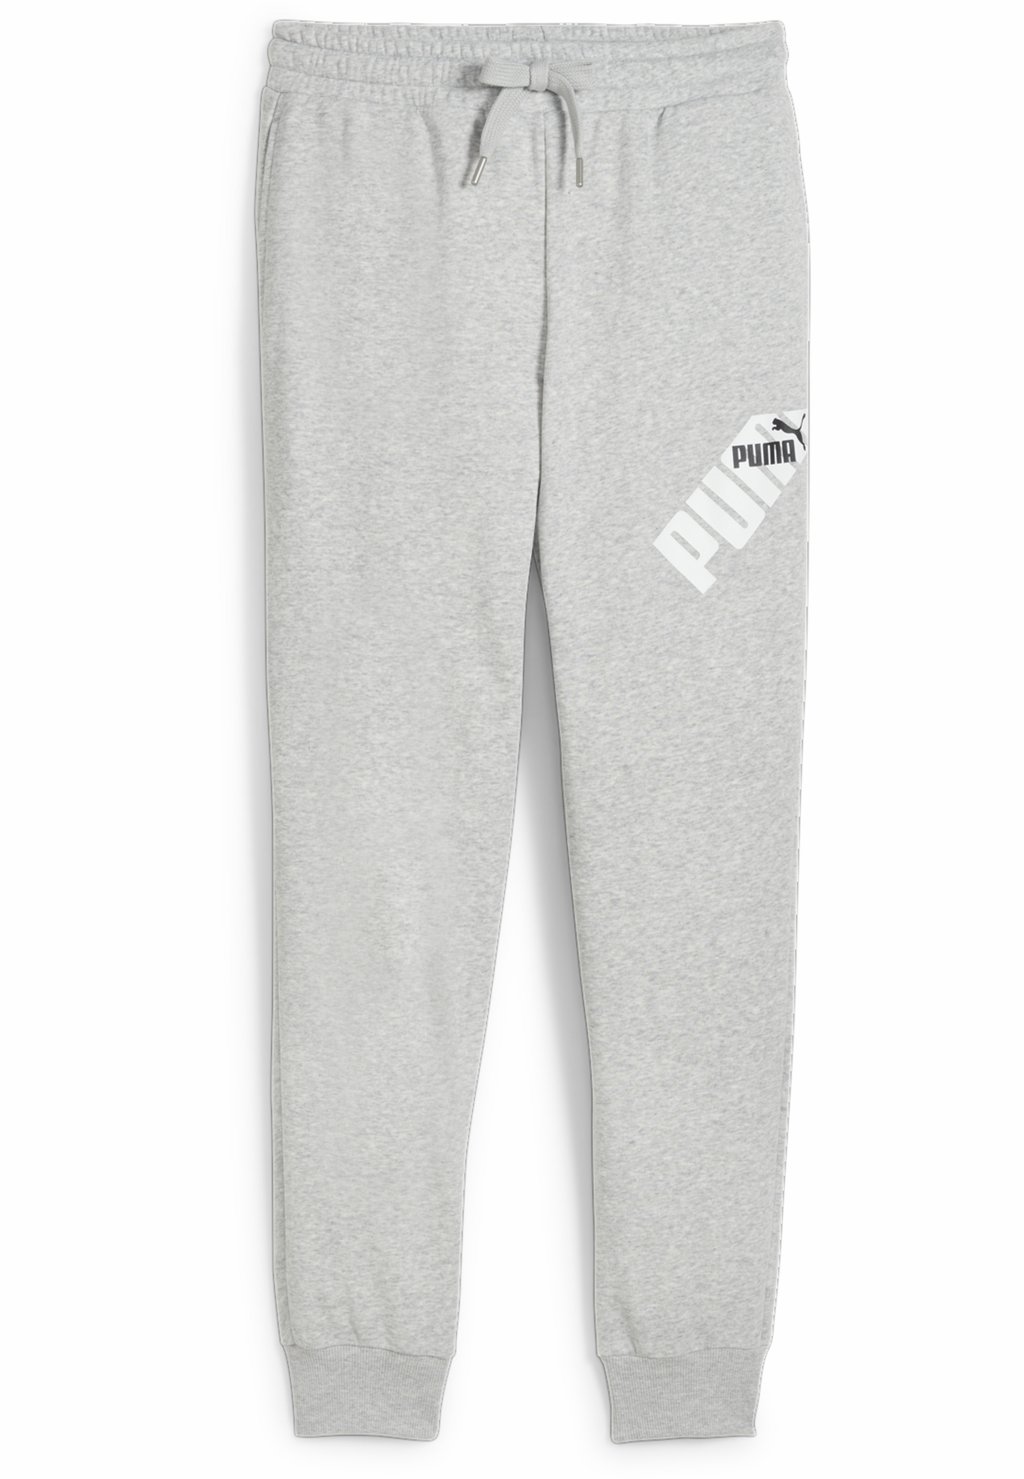 Спортивные брюки Power Graphic Puma, цвет light gray heather